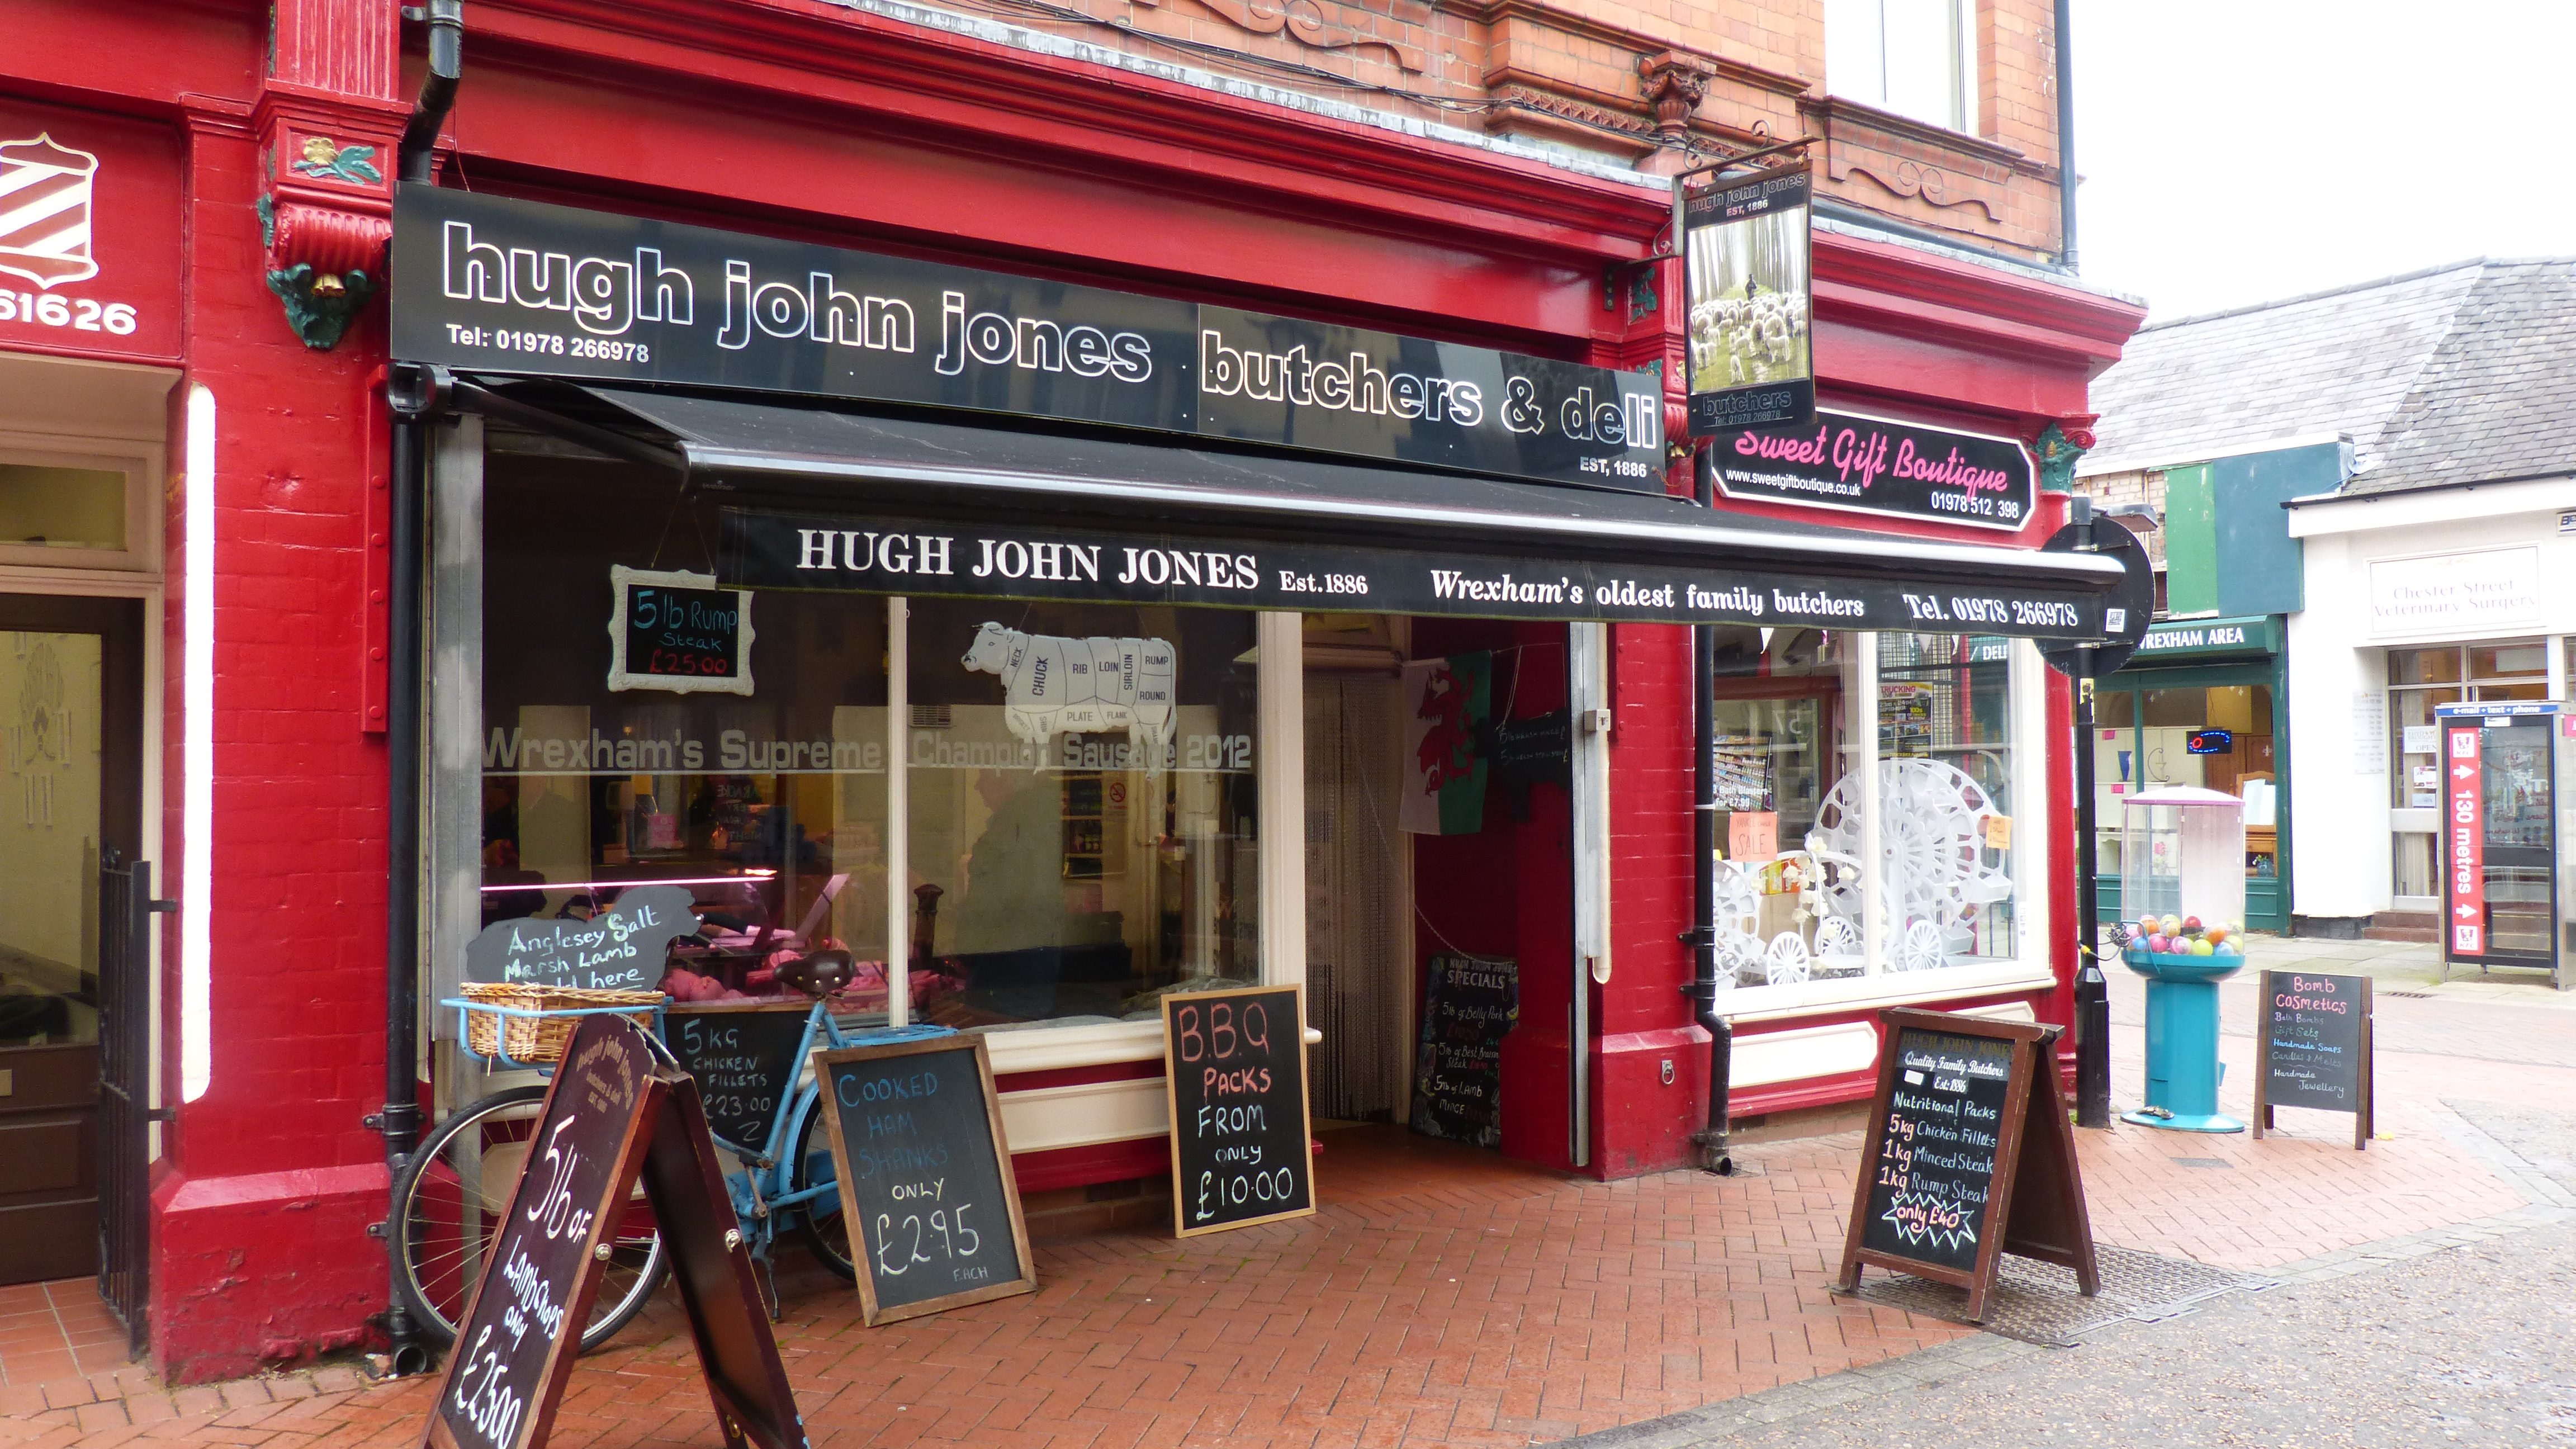 Long links with town for Hugh John Jones Butchers